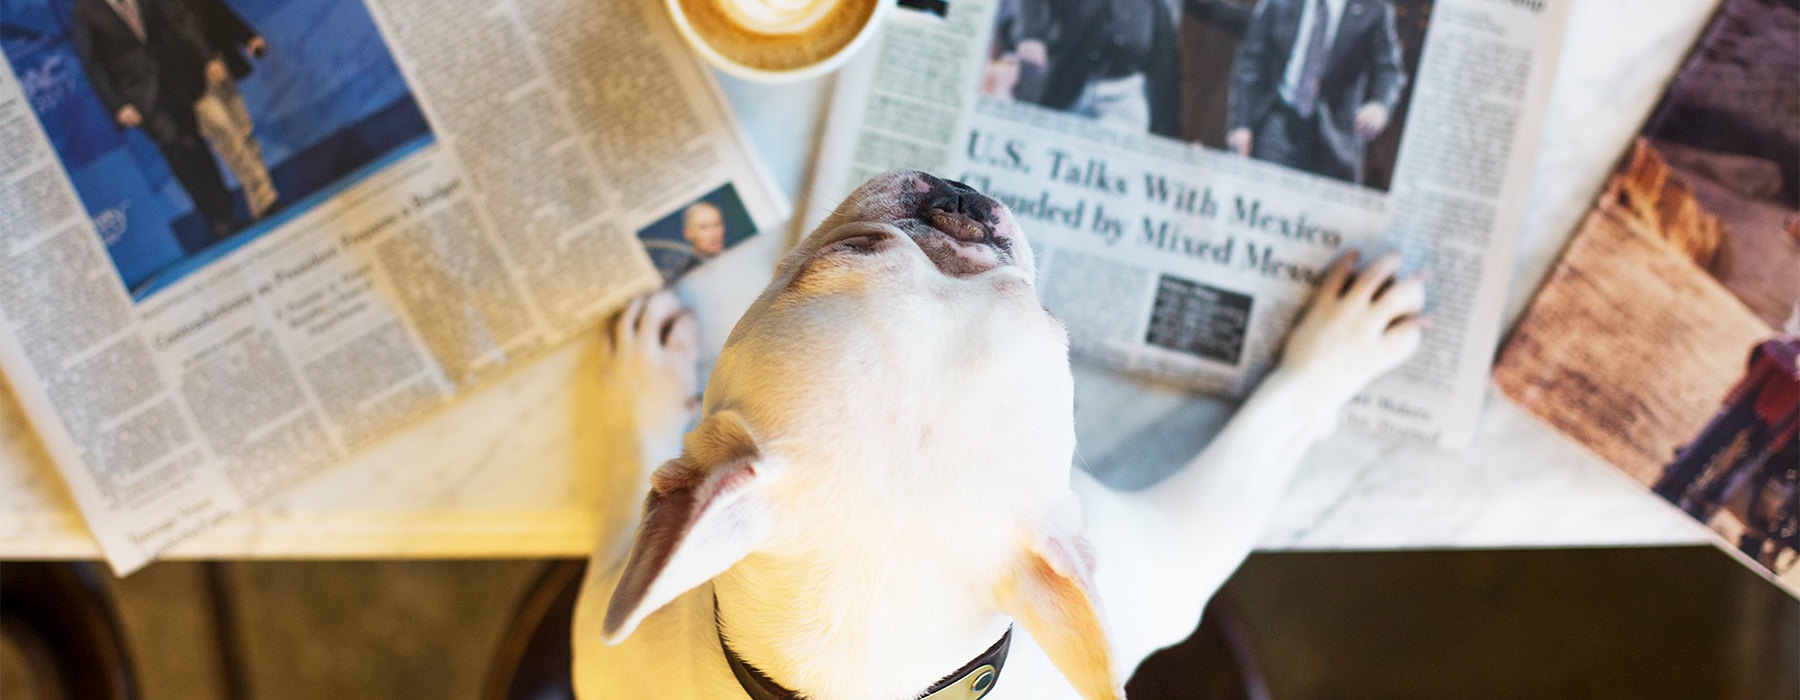 dog looks like he's reading the newspaper